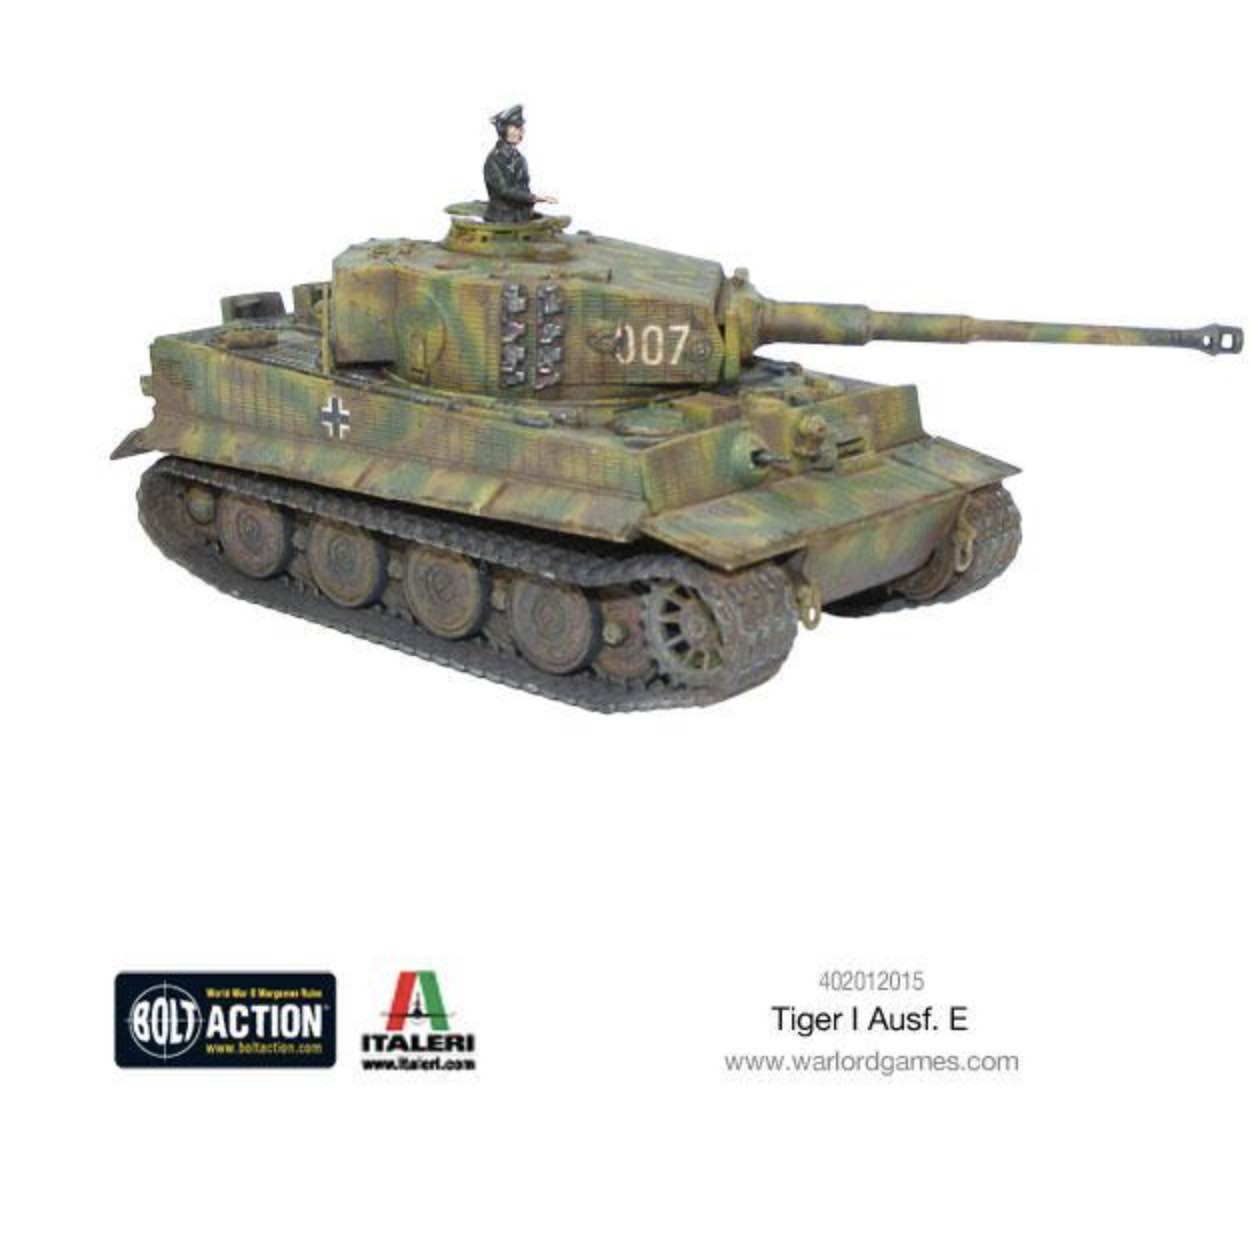 402012015 tiger I ausf E modelo_1